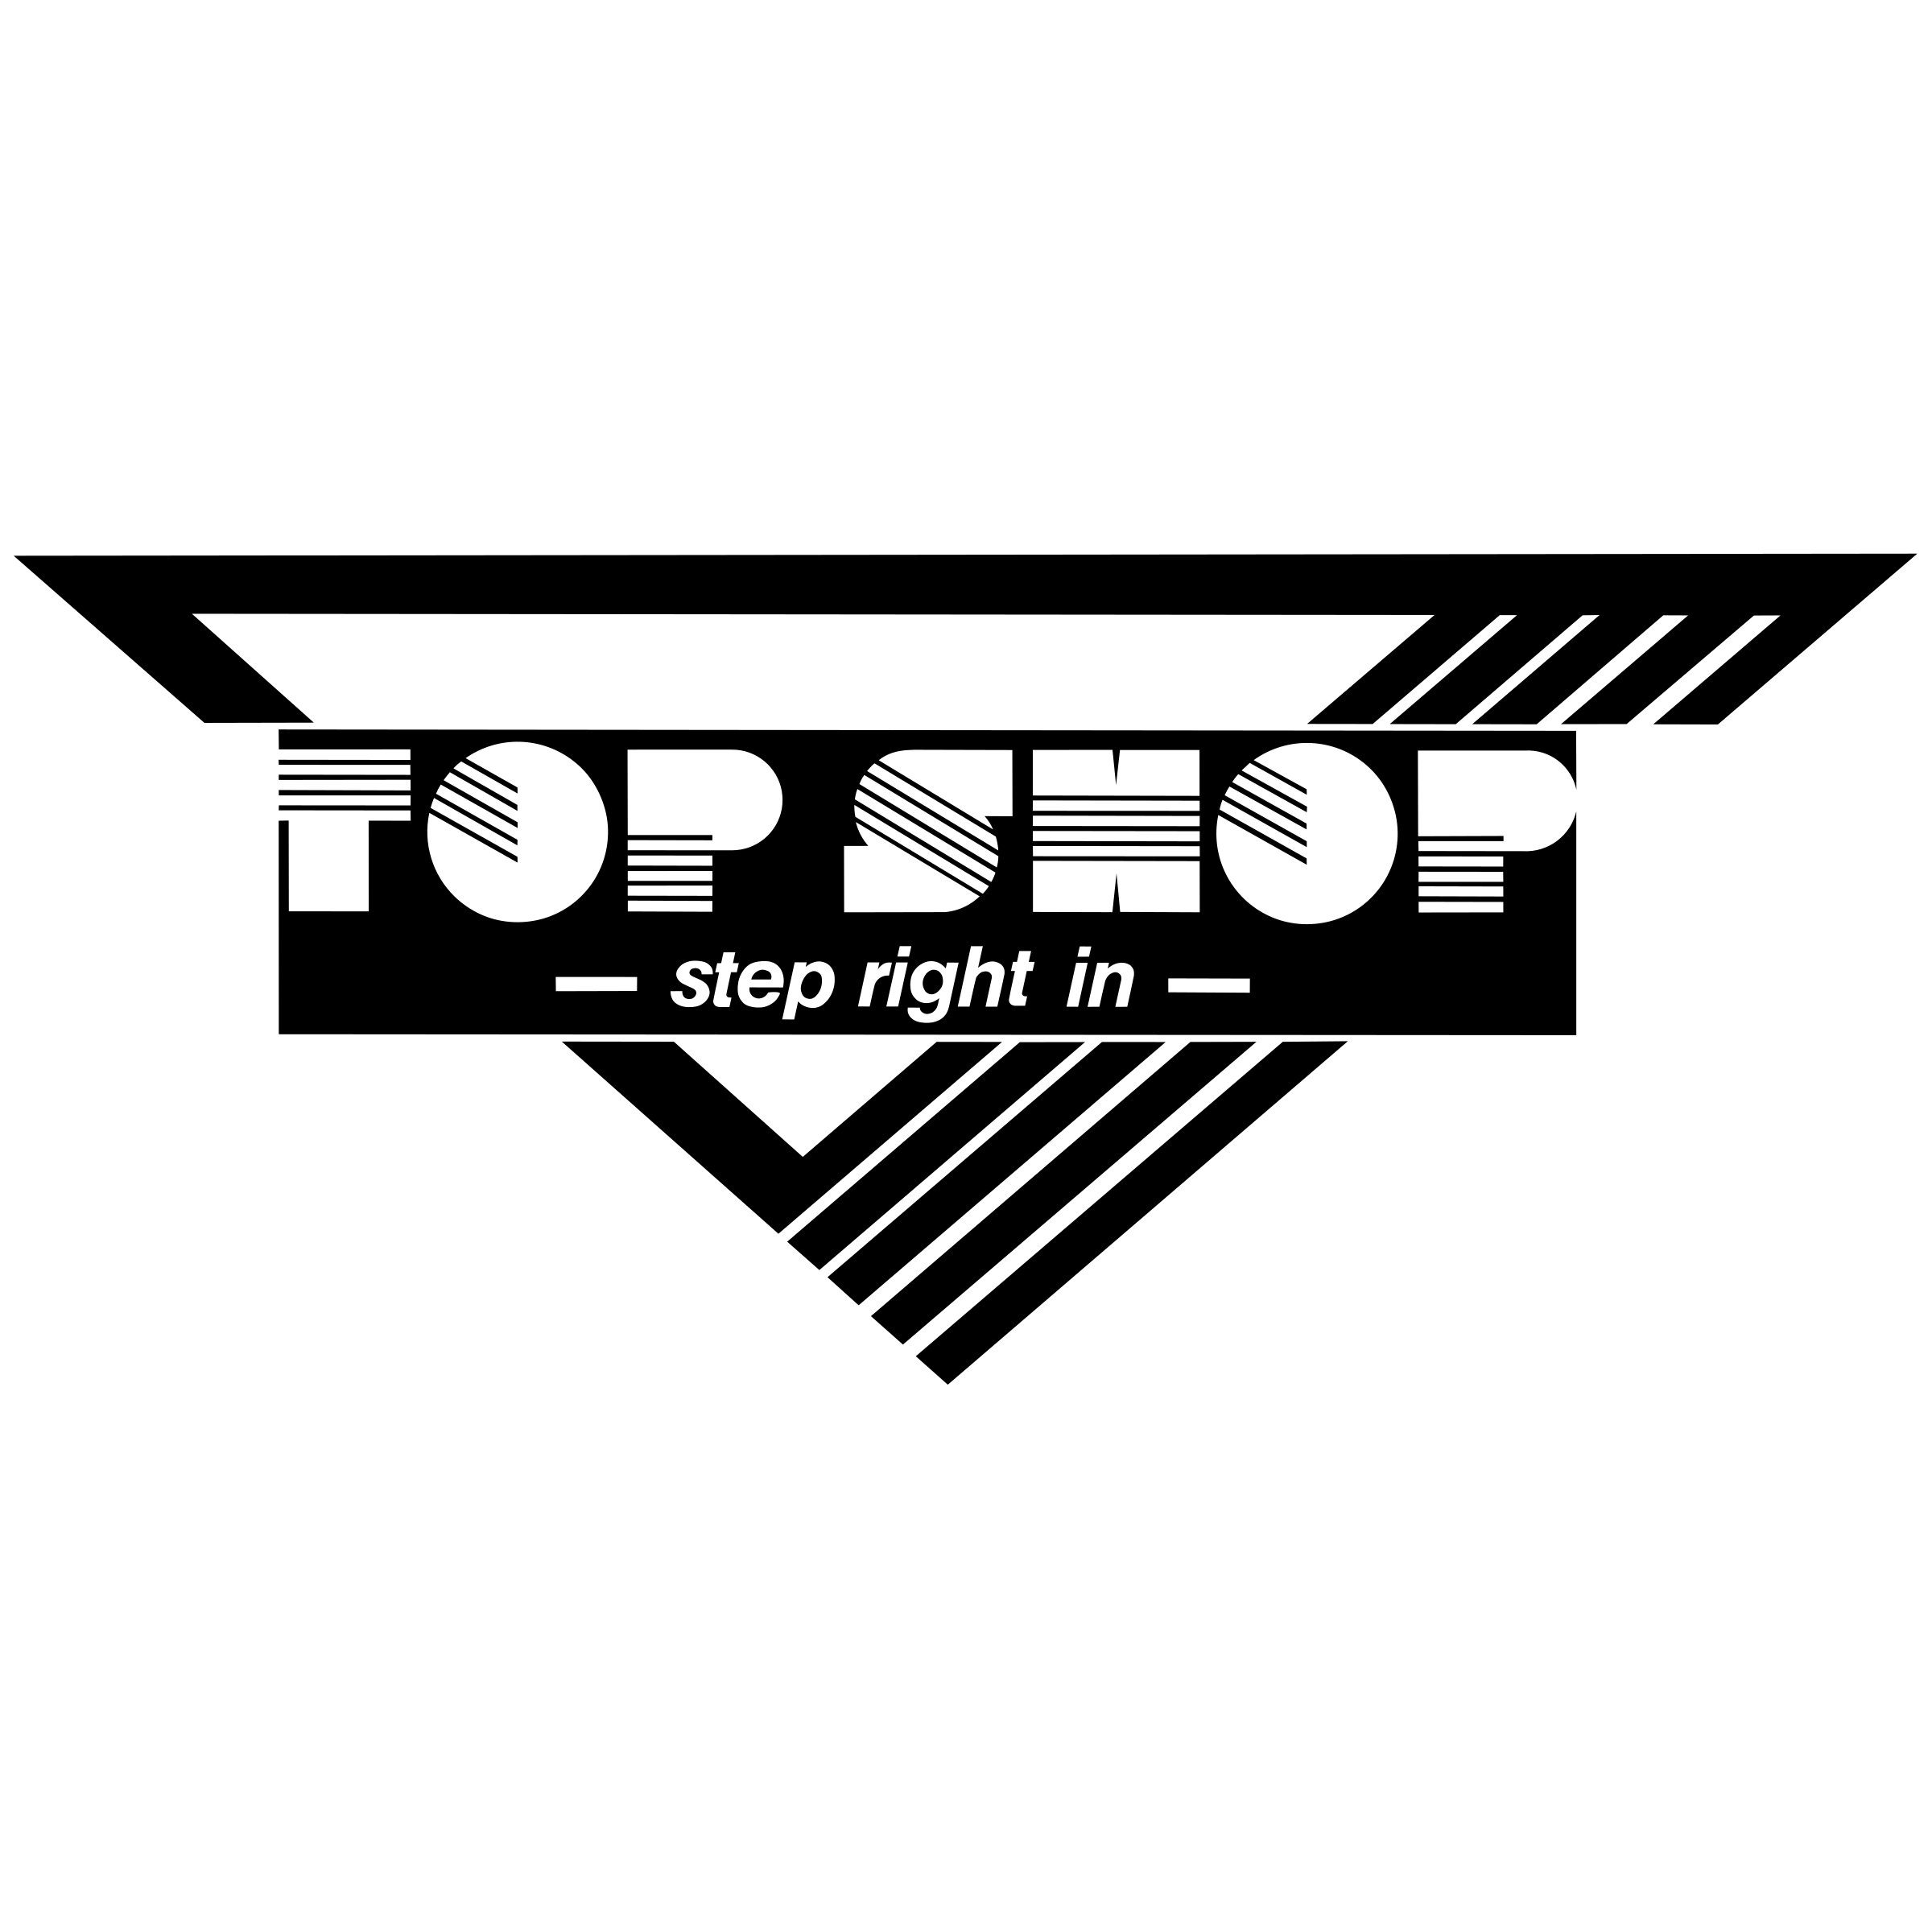 Topshop Logo - TopShop Logo PNG Transparent & SVG Vector - Freebie Supply